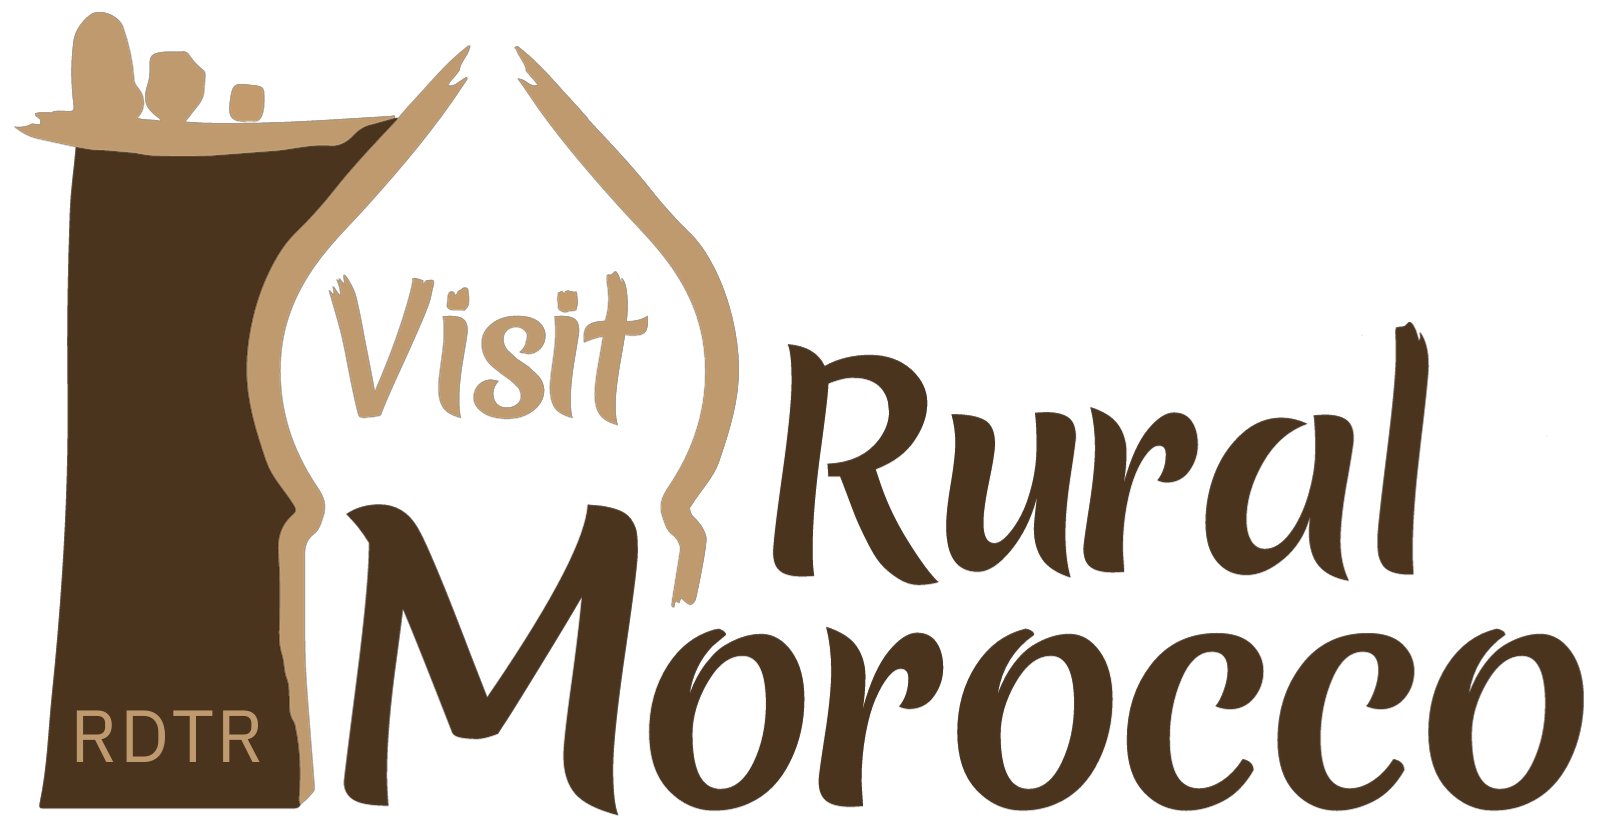 Visite du Maroc rural - Inzegane Ait Melloul